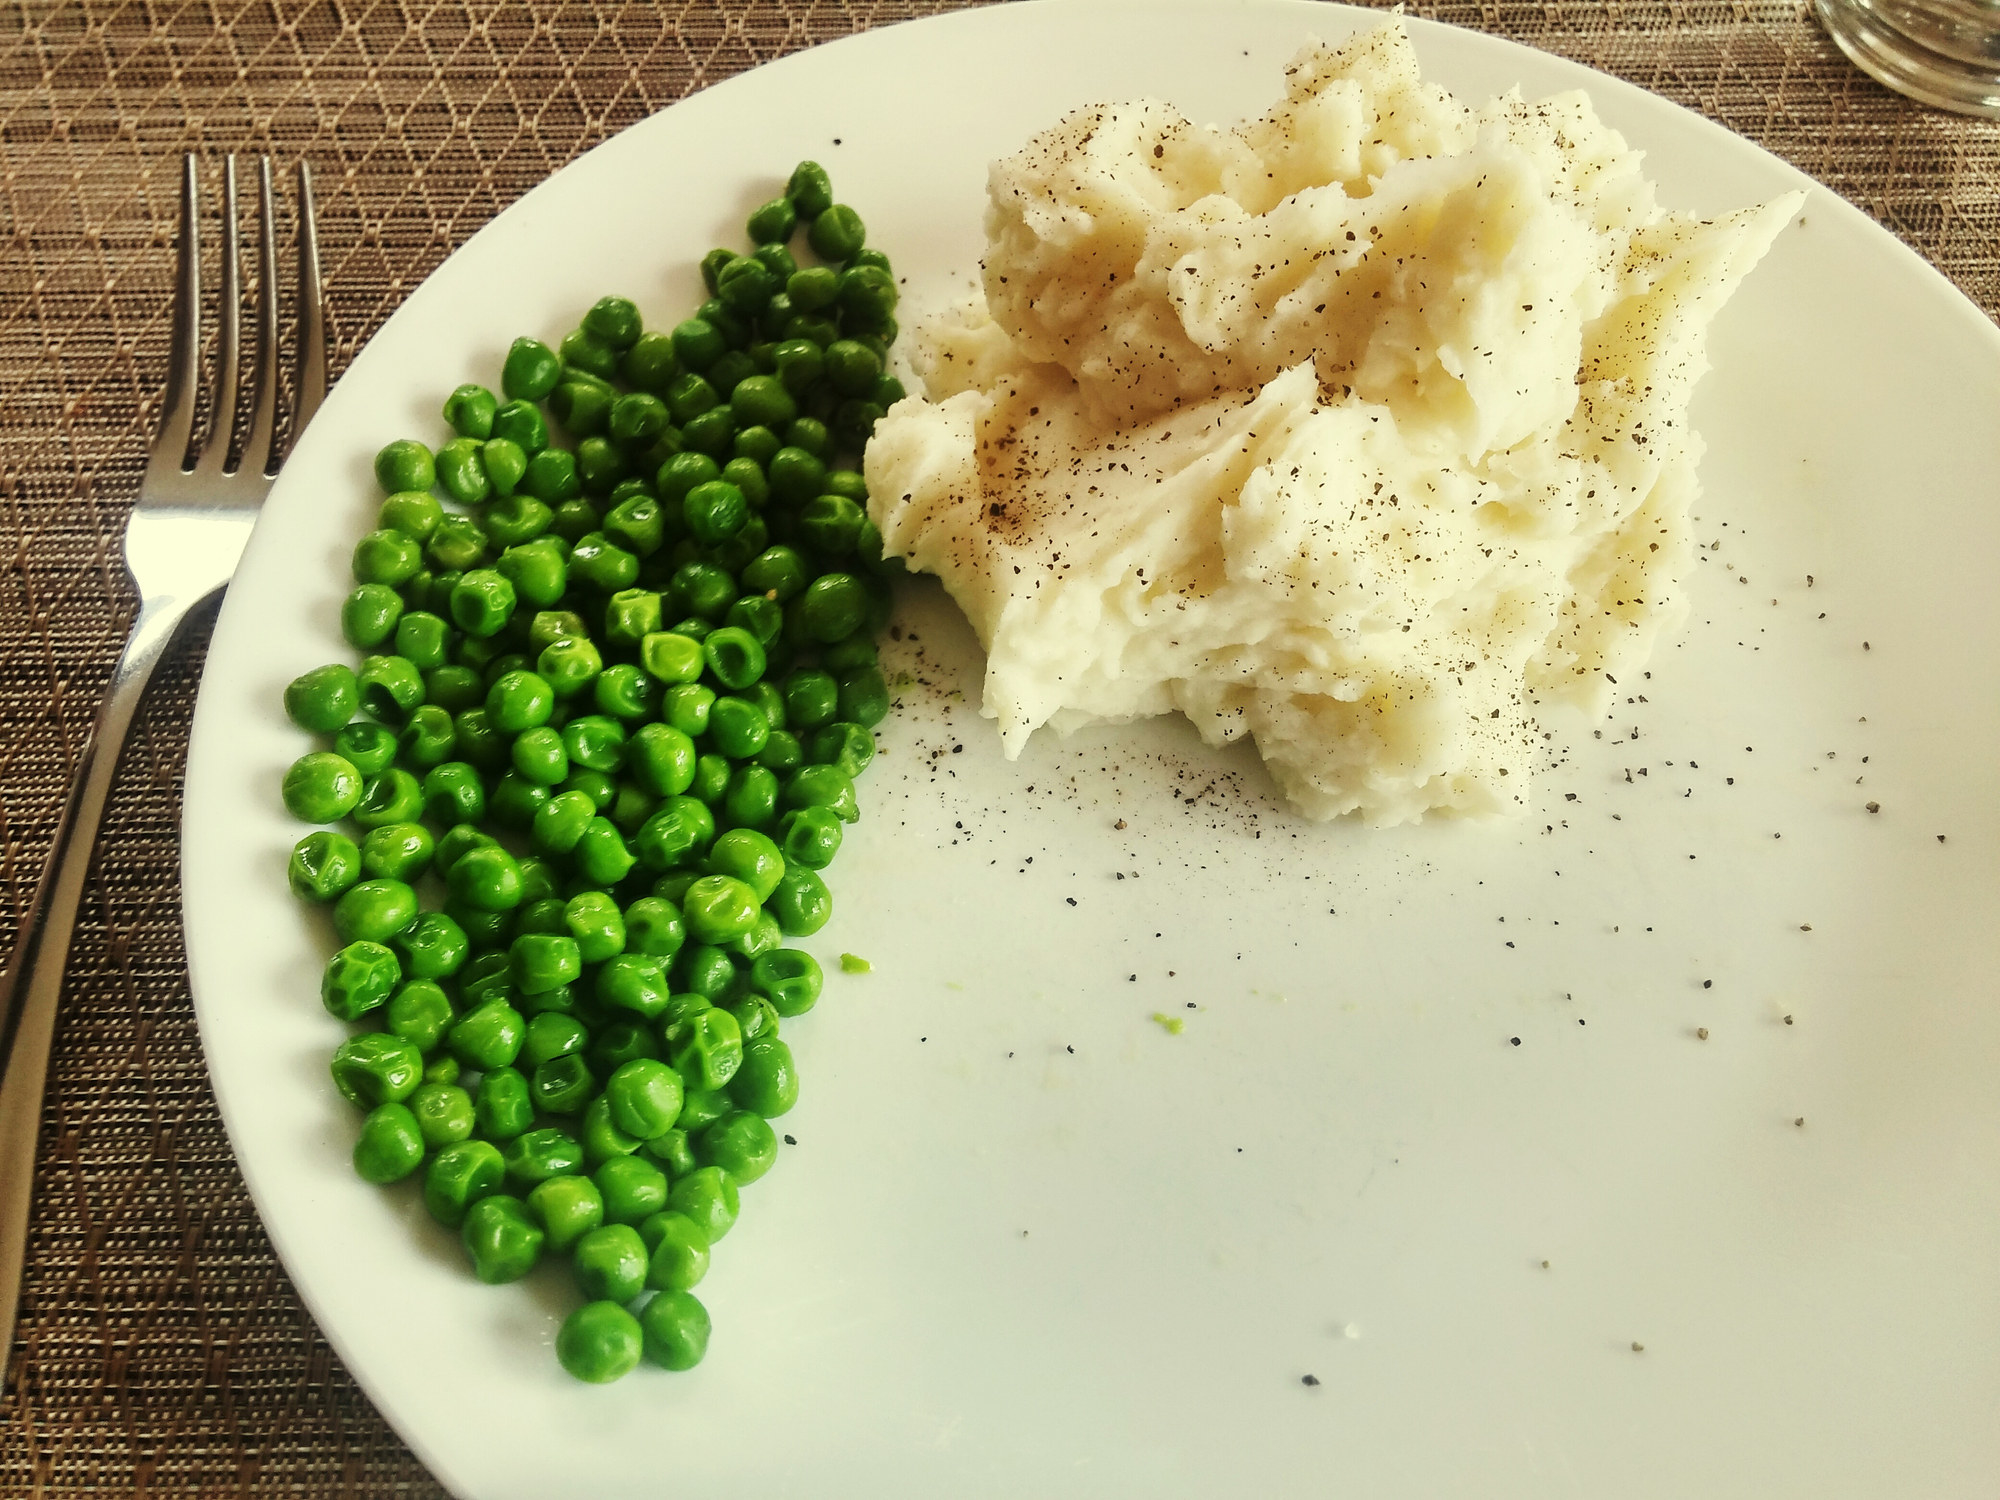 Mashed potatoes and peas.